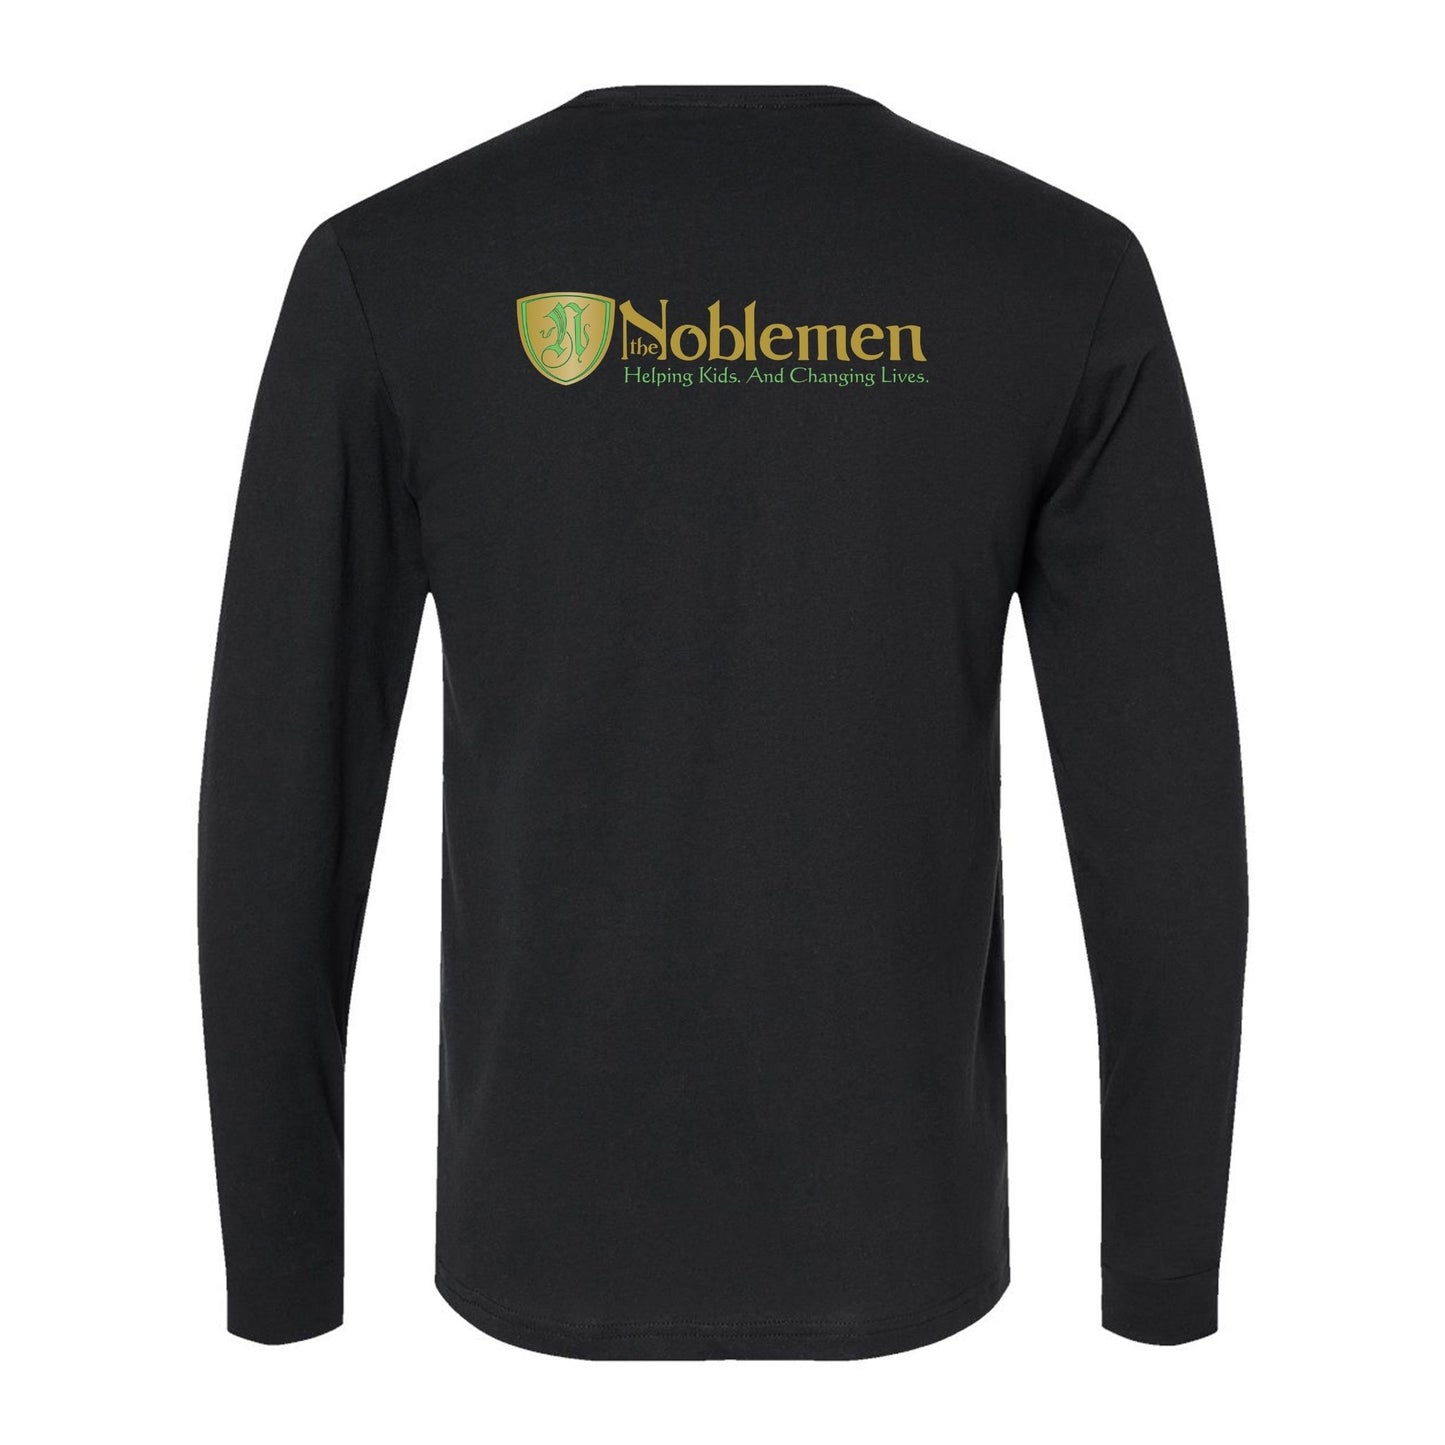 Noblemen - Unisex Long-Sleeve T-Shirt